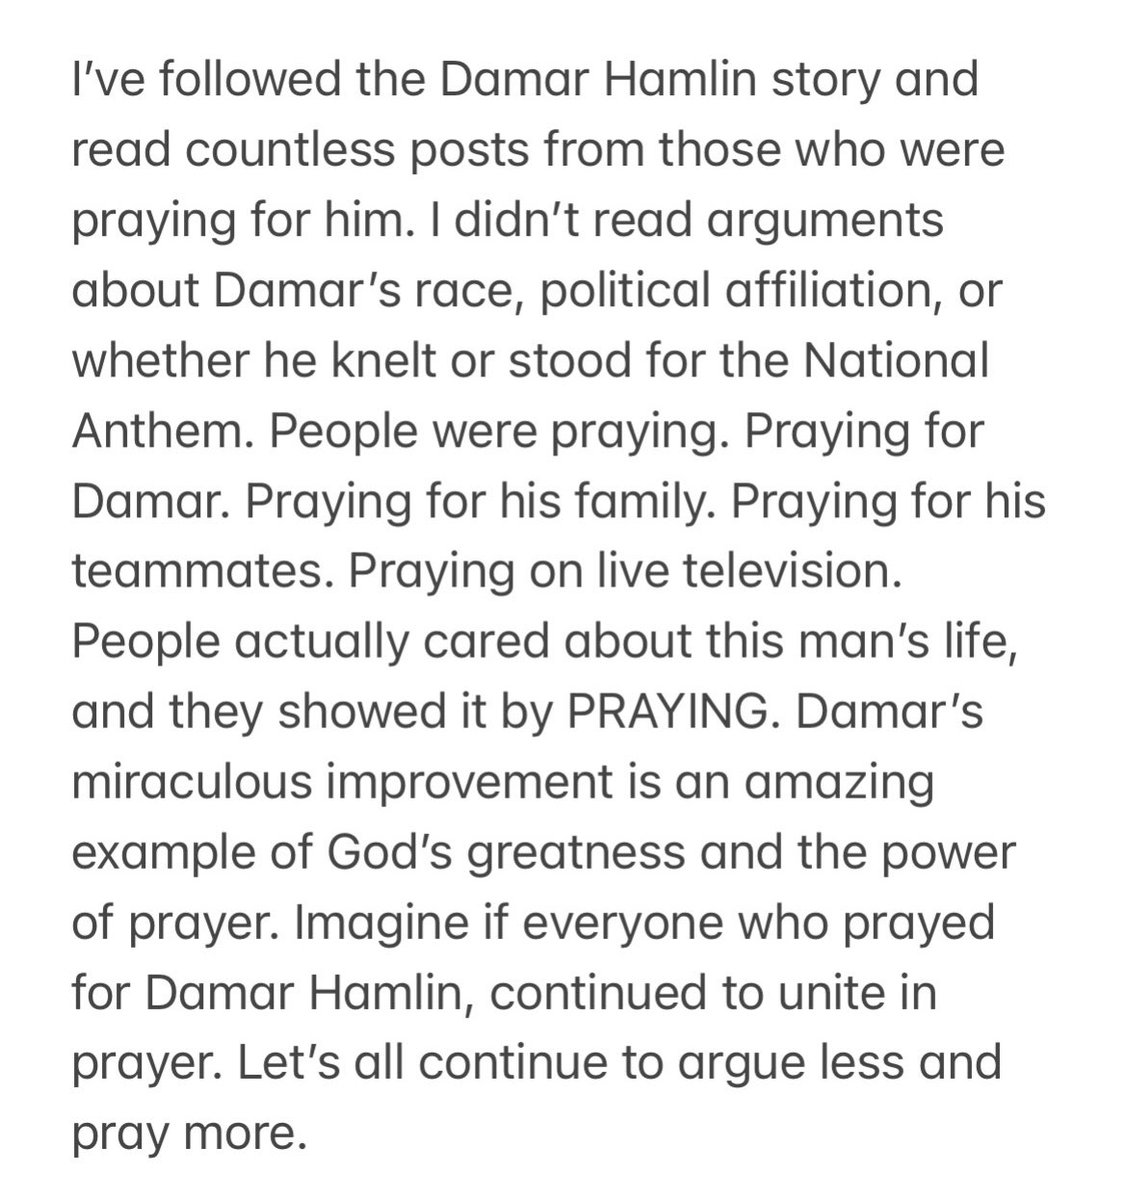 #PrayMore #HowGreatIsOurGod #ComeTogether #PrayerIsPowerful #DamarHamlin